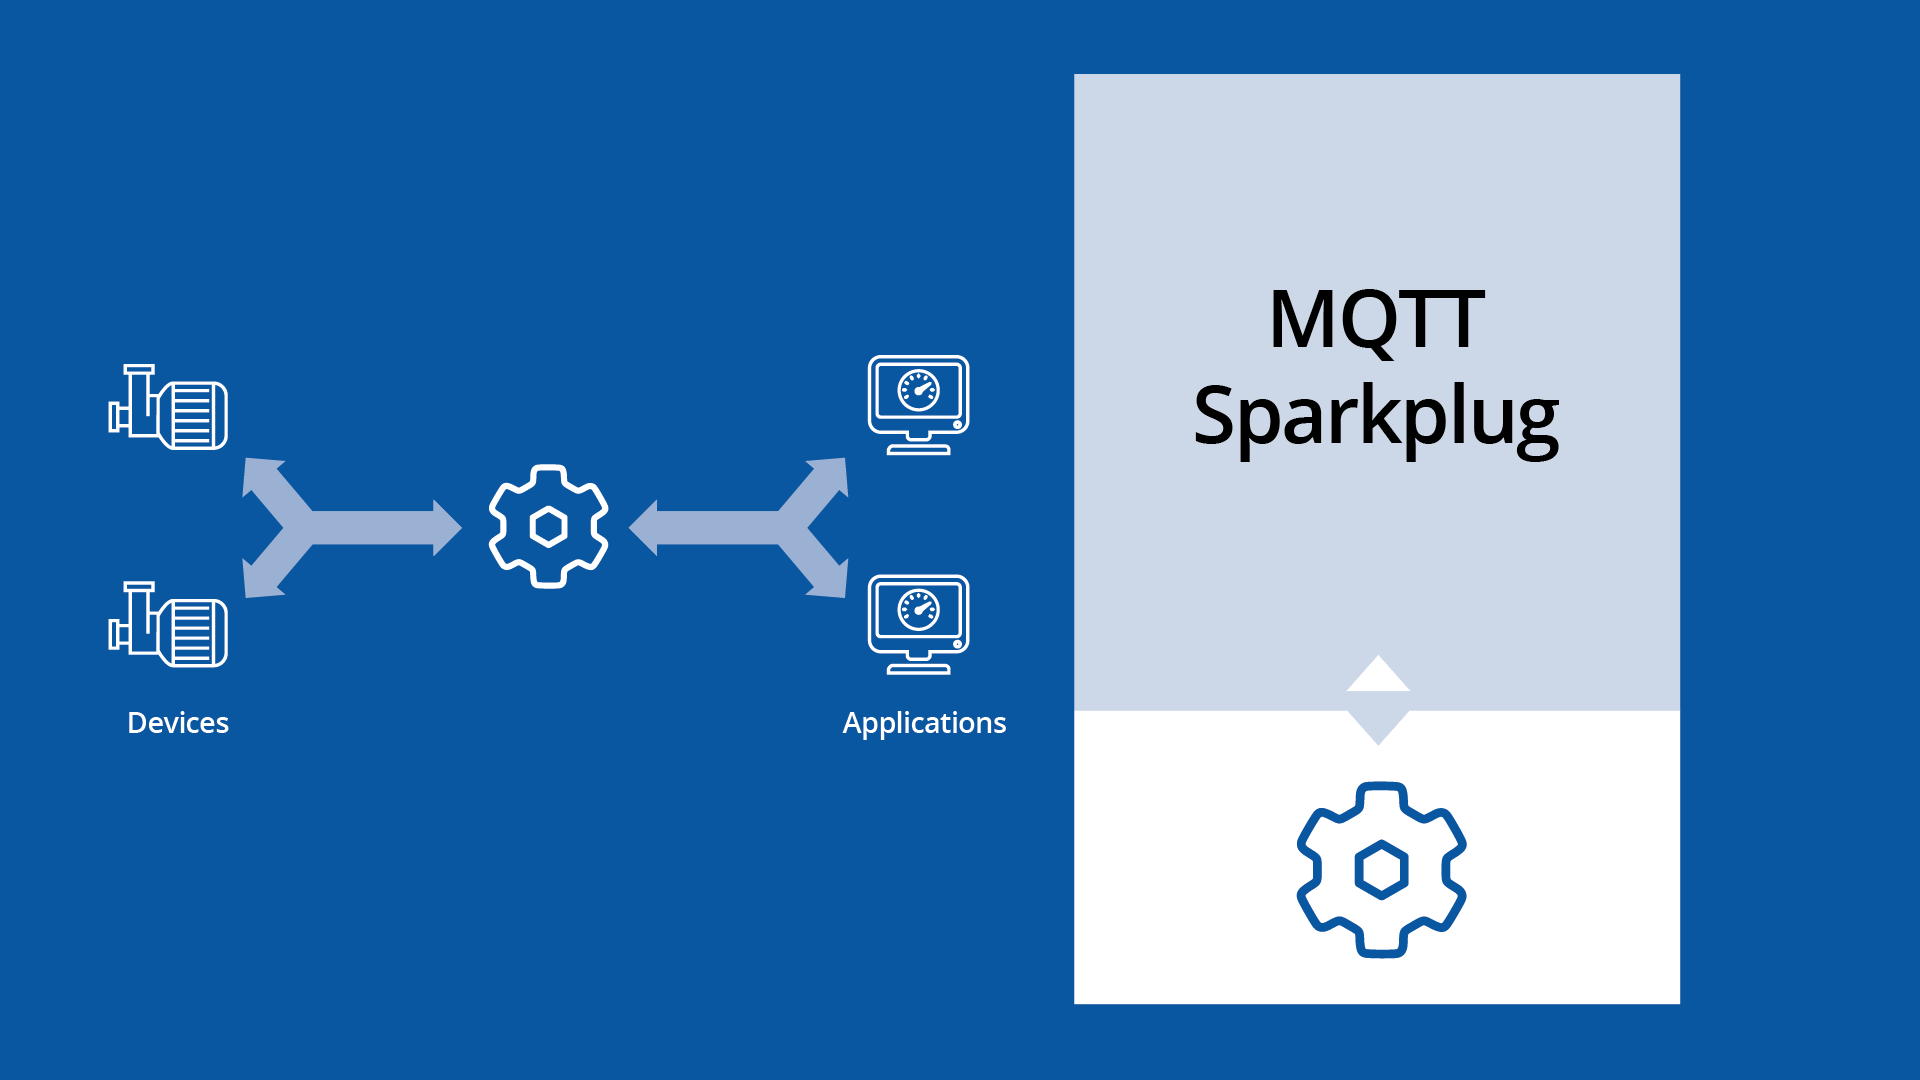 MQTT sparkplug connections